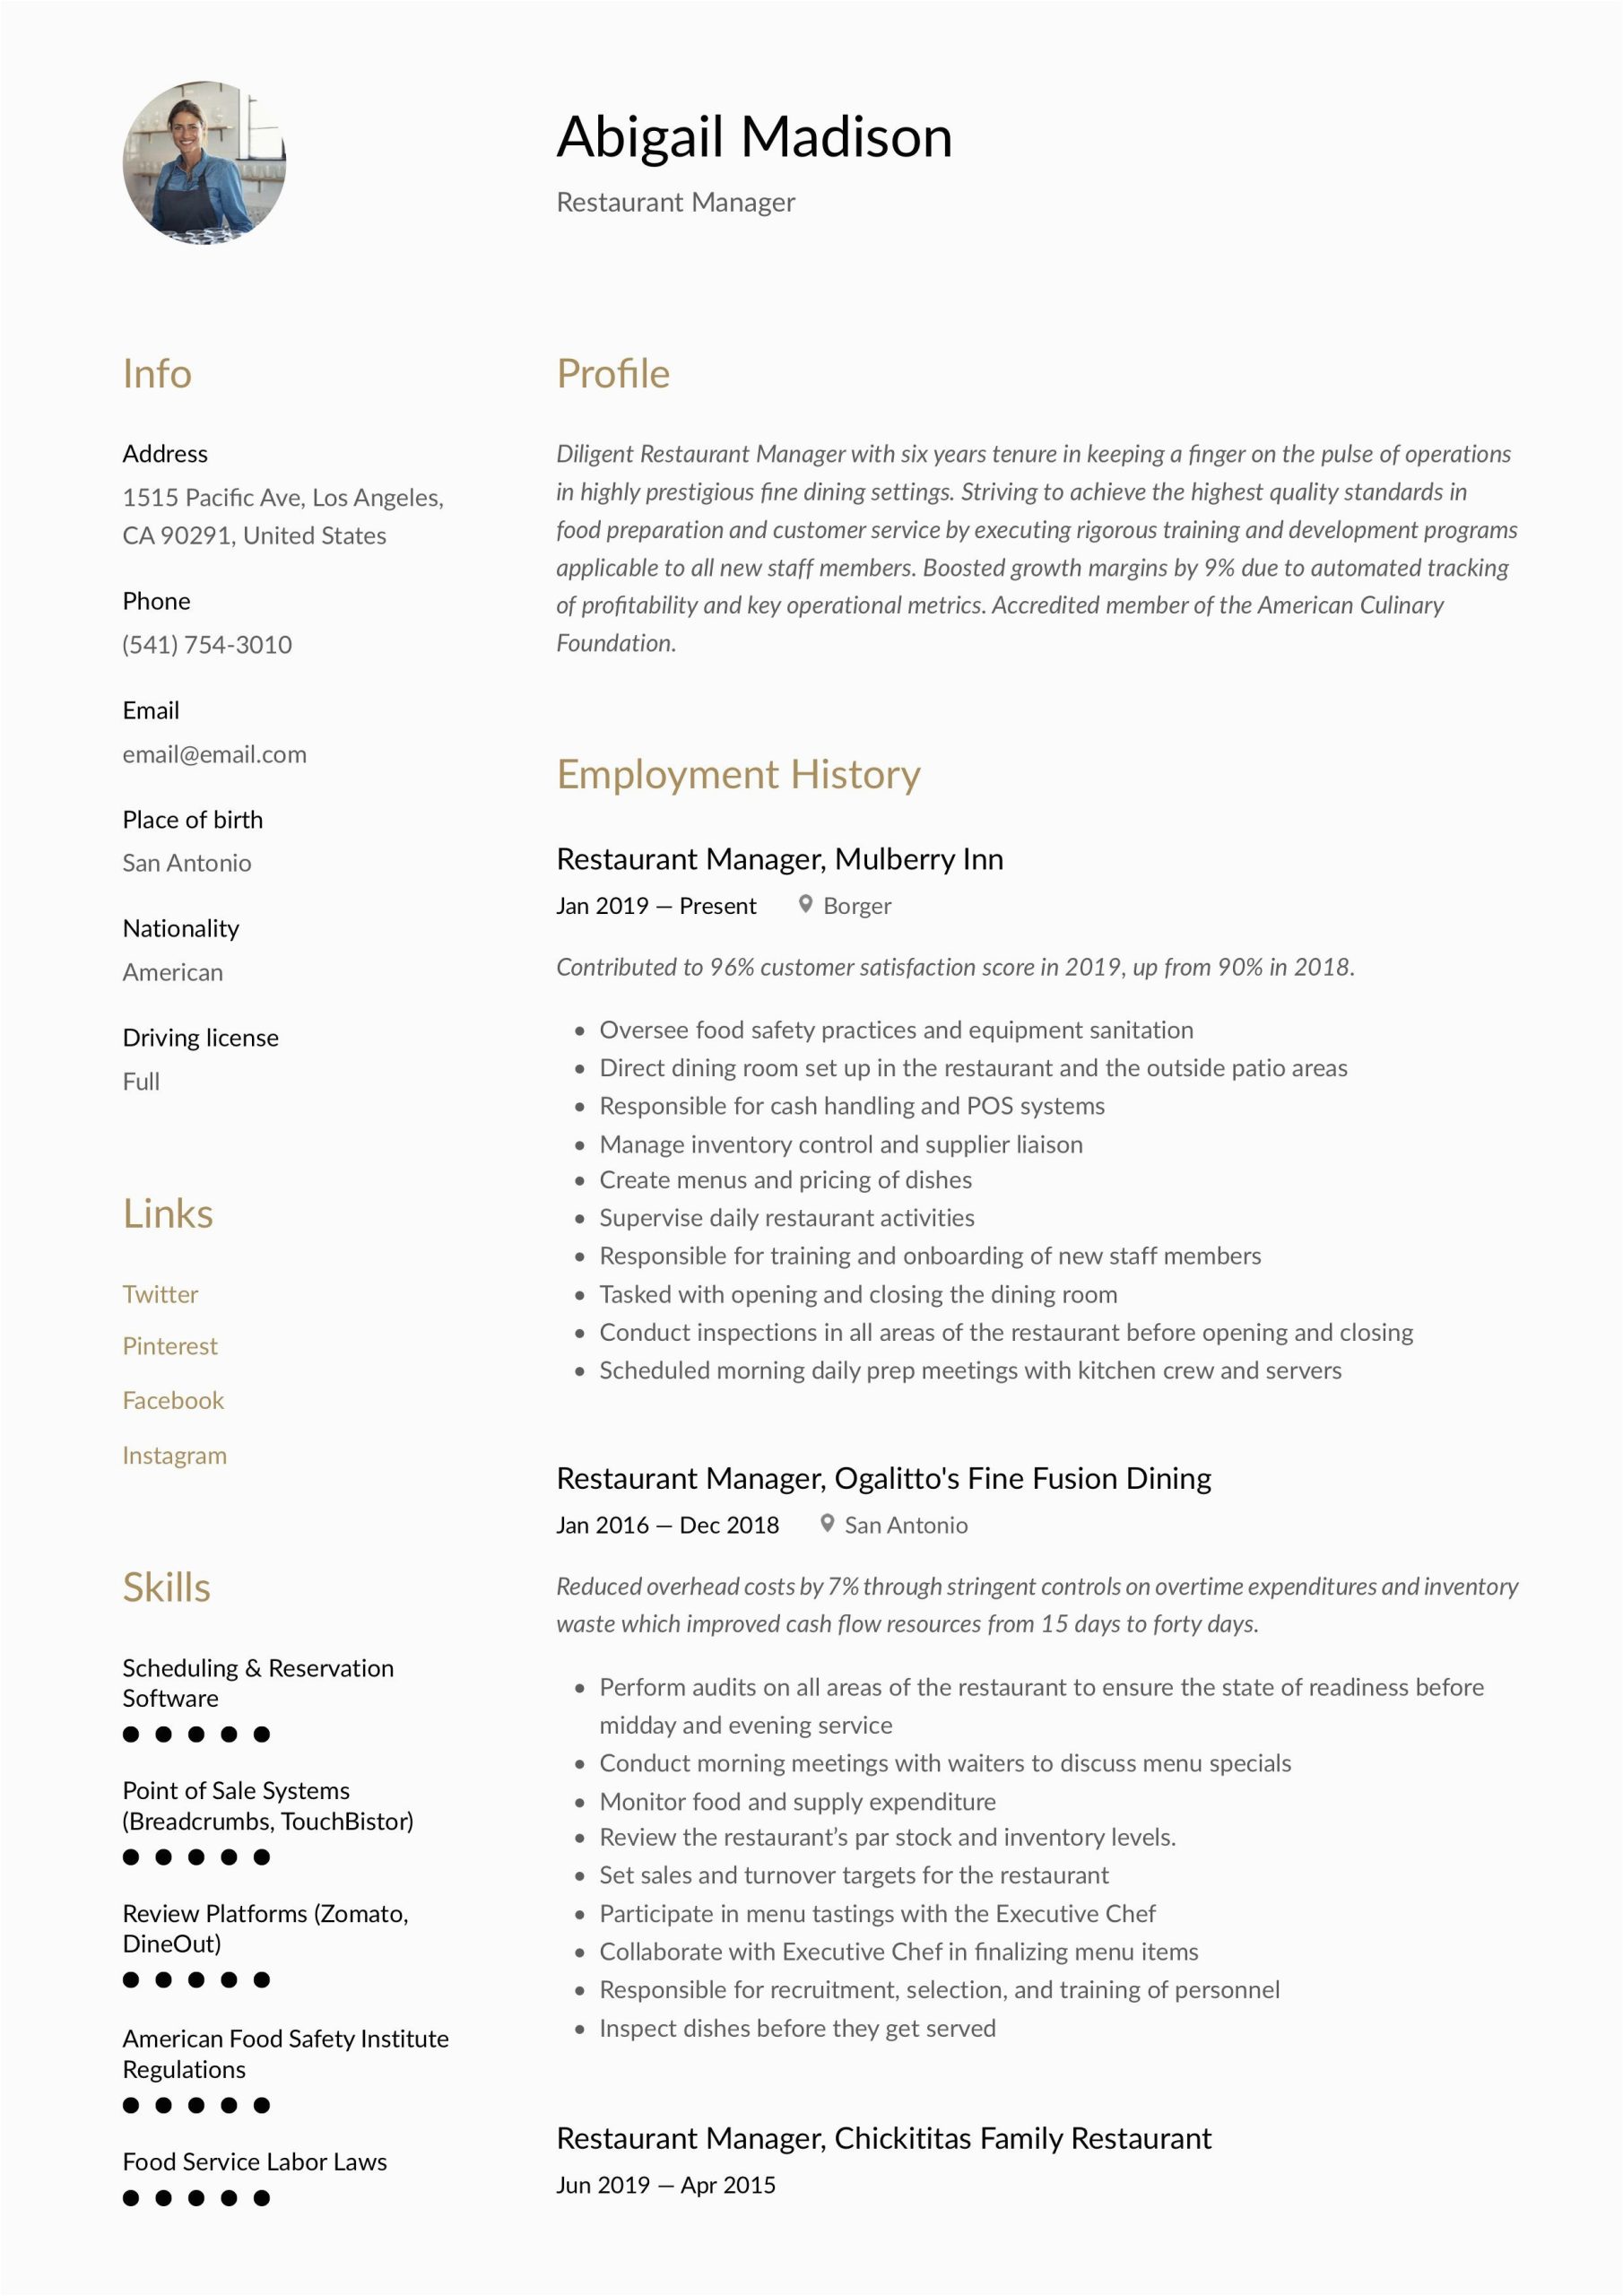 Sample Resume format for Restaurant Manager Restaurant Manager Resume Template